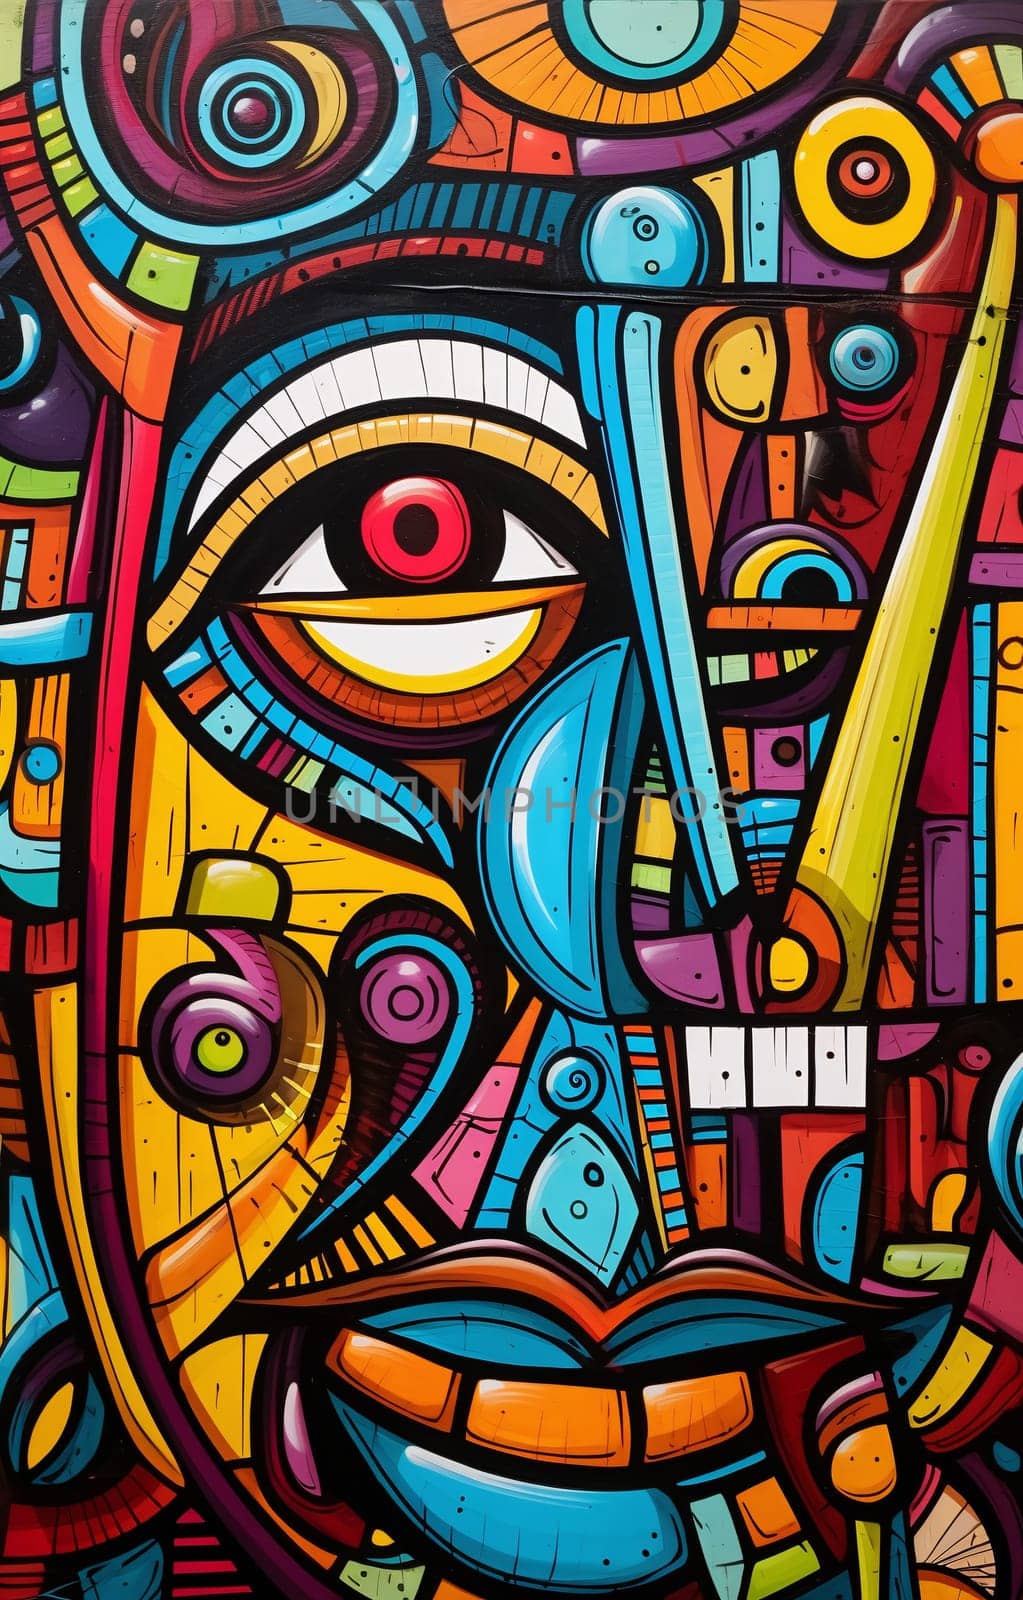 Vibrant Abstract Graffiti Art on Urban Wall by chrisroll